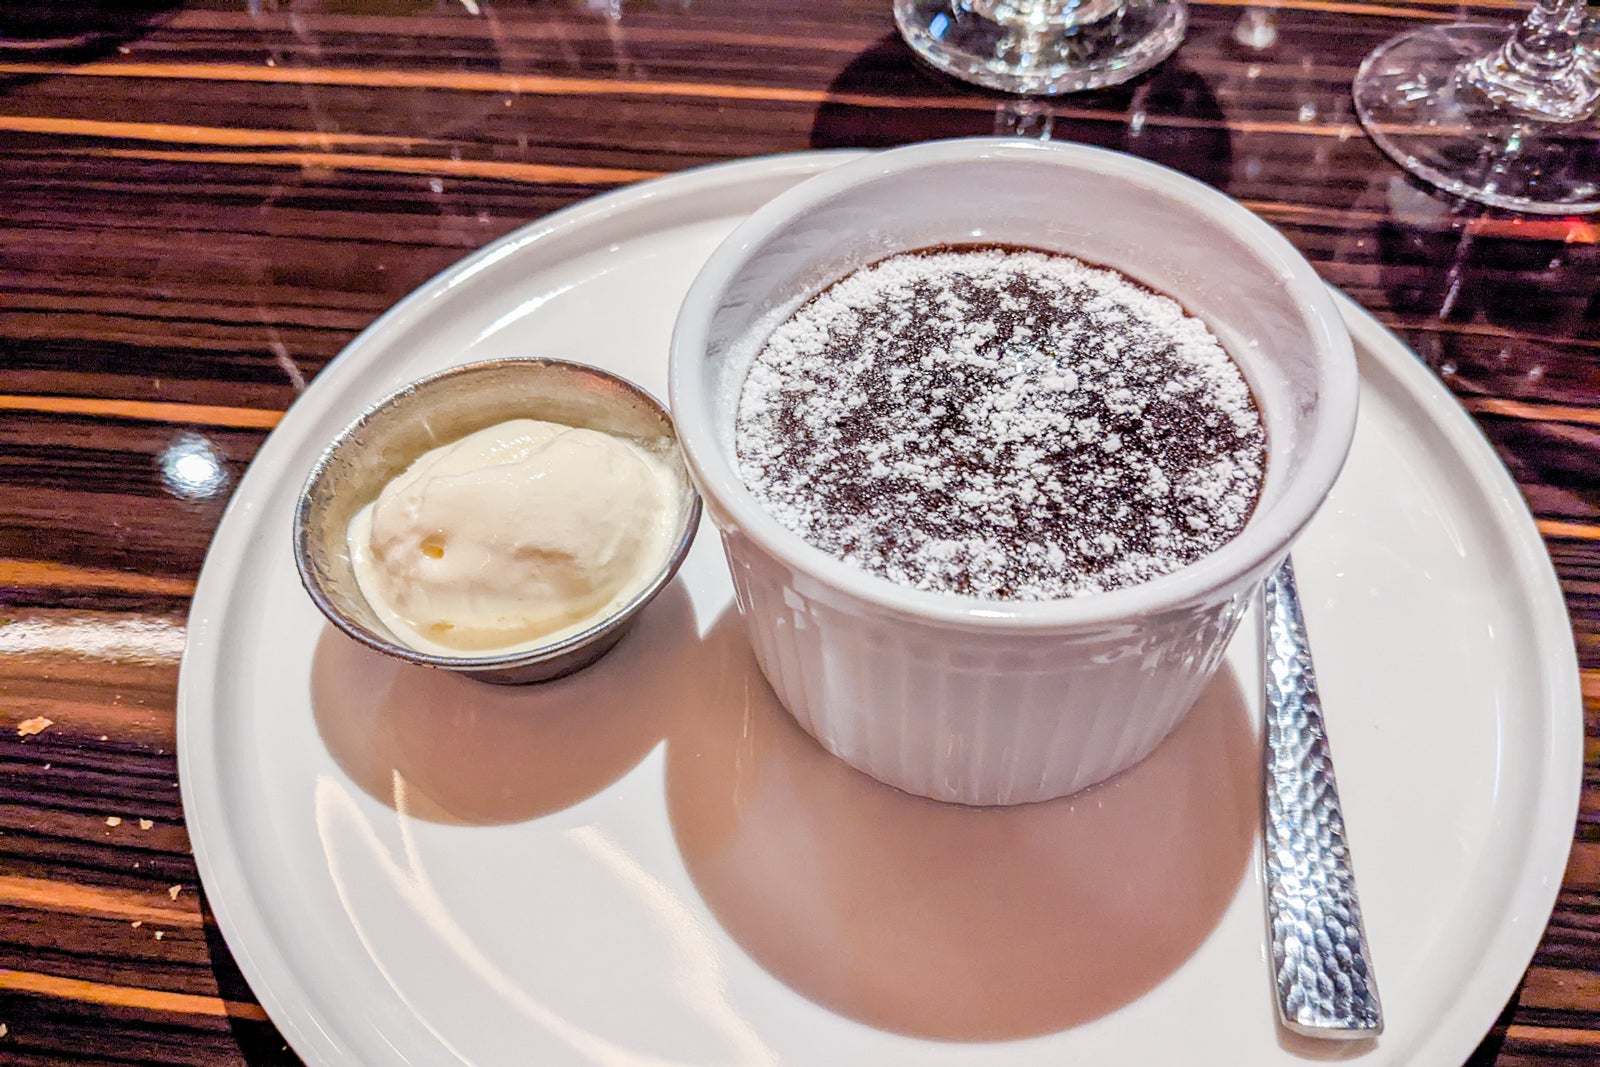 Chocolate melting cake in ramekin with scoop of ice cream on Carnival cruise